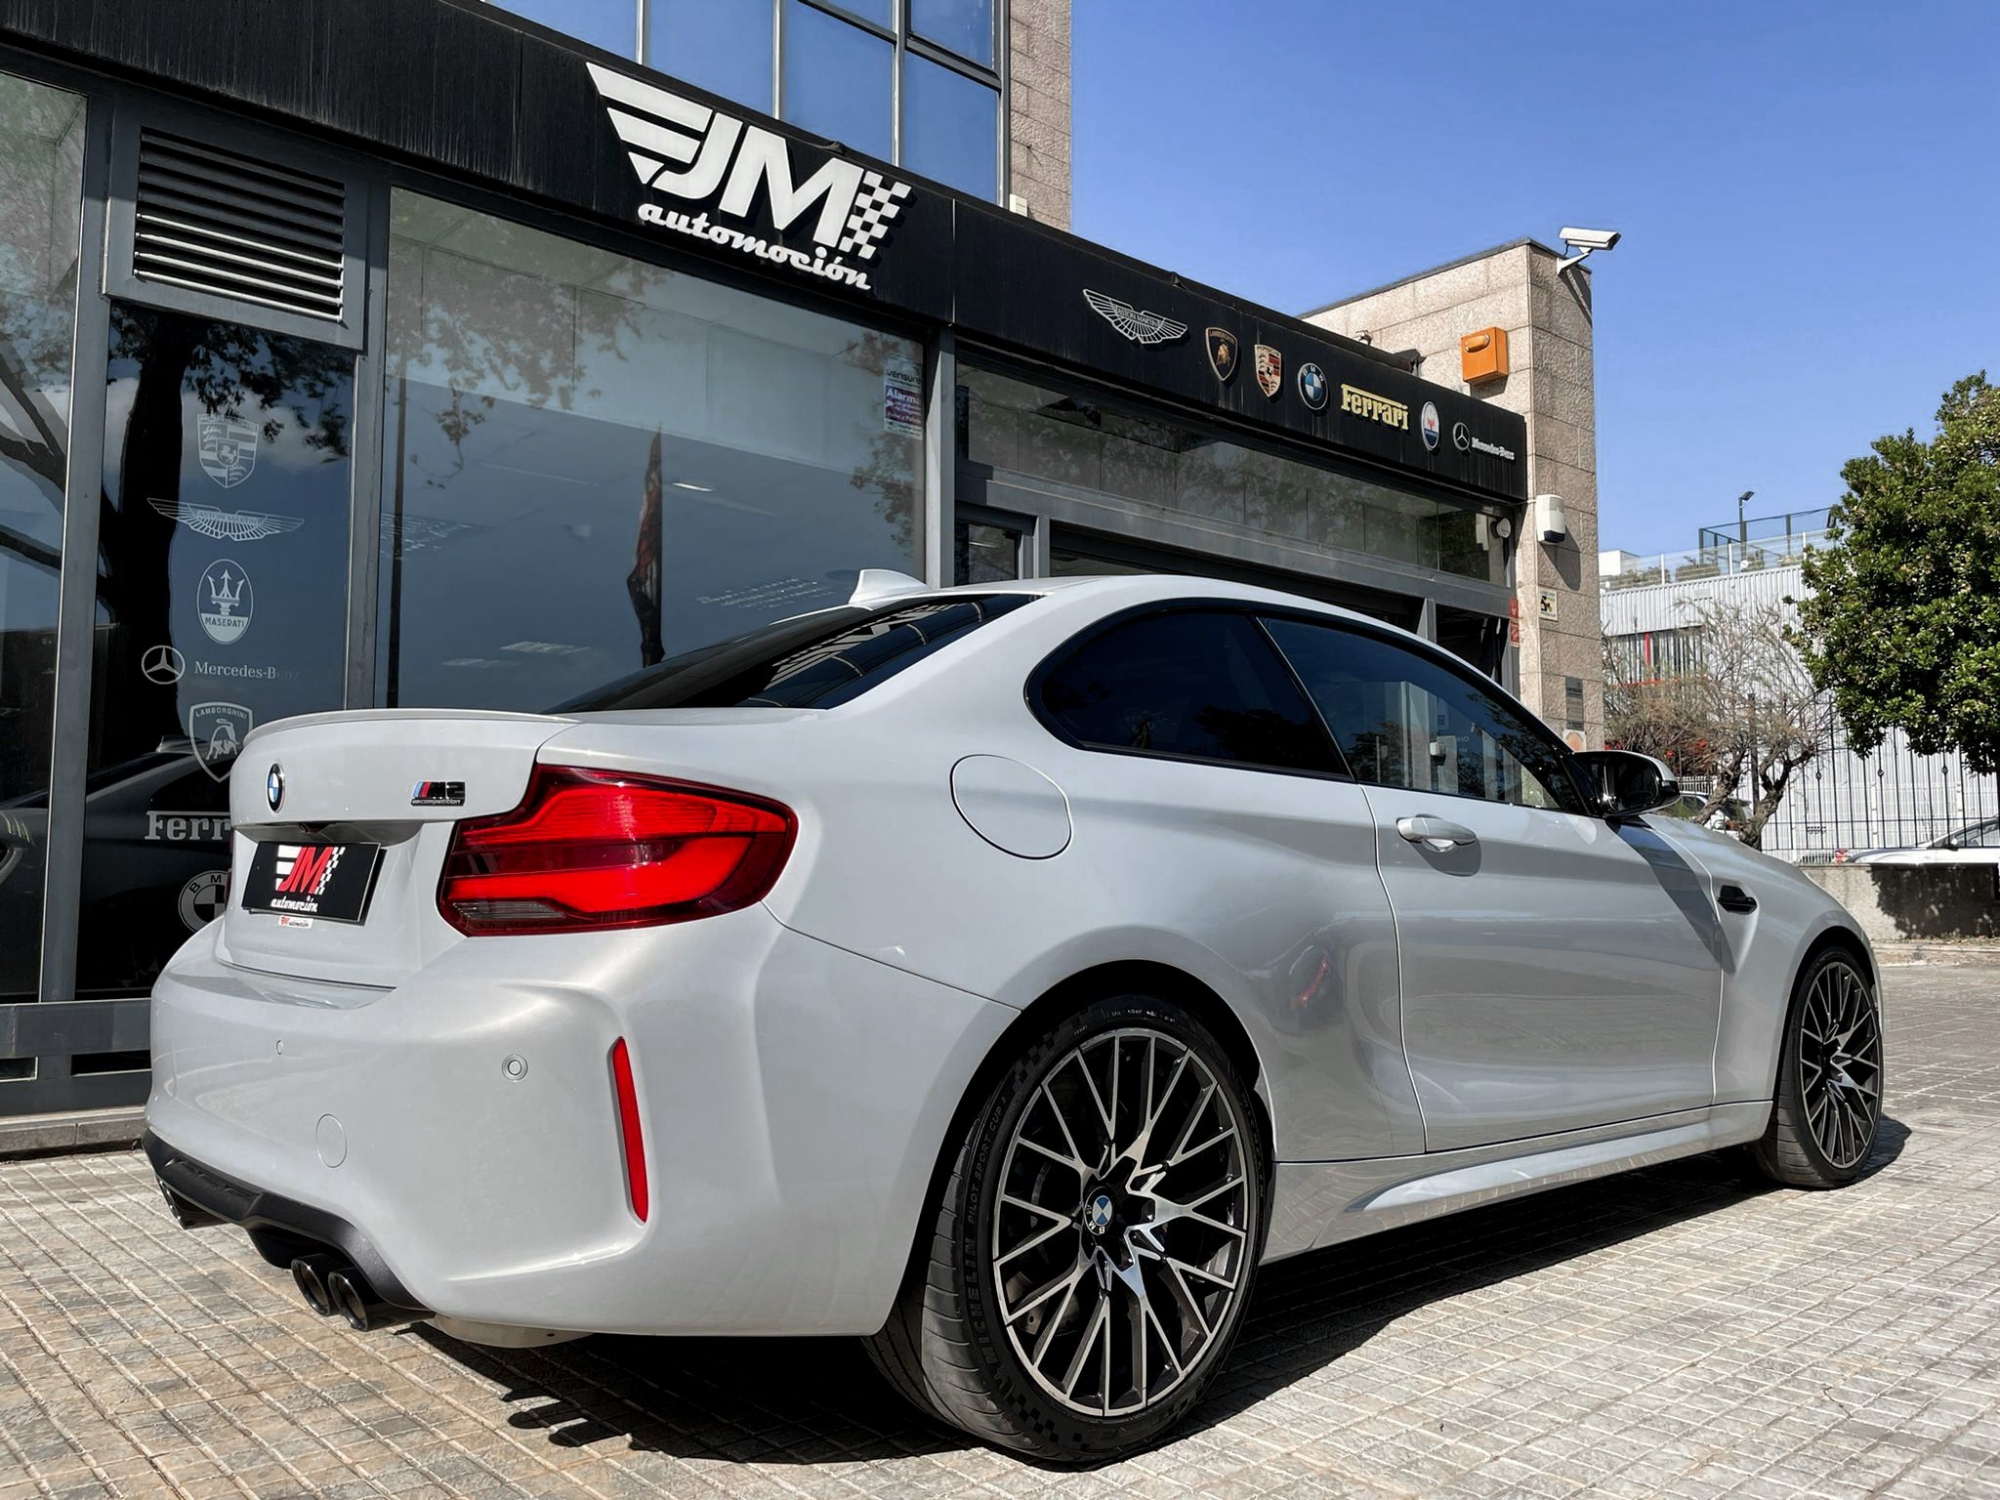 BMW M2 COMPETITION -NACIONAL, IMPECABLE ESTADO-